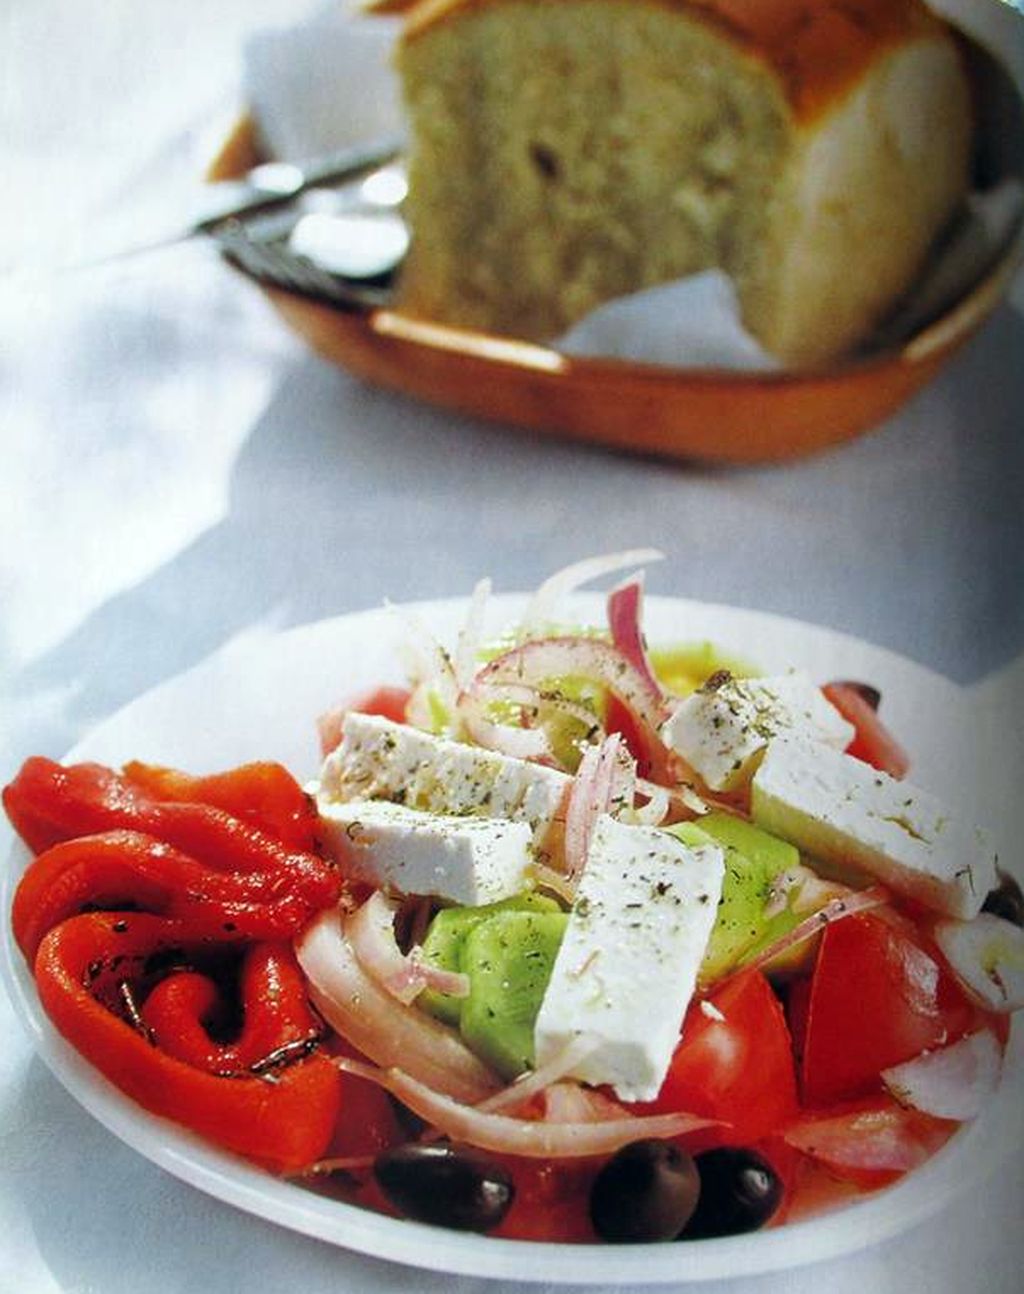 Aus dem Kochstudio: ein bunter Gemüsesalat. | Radio Kreta